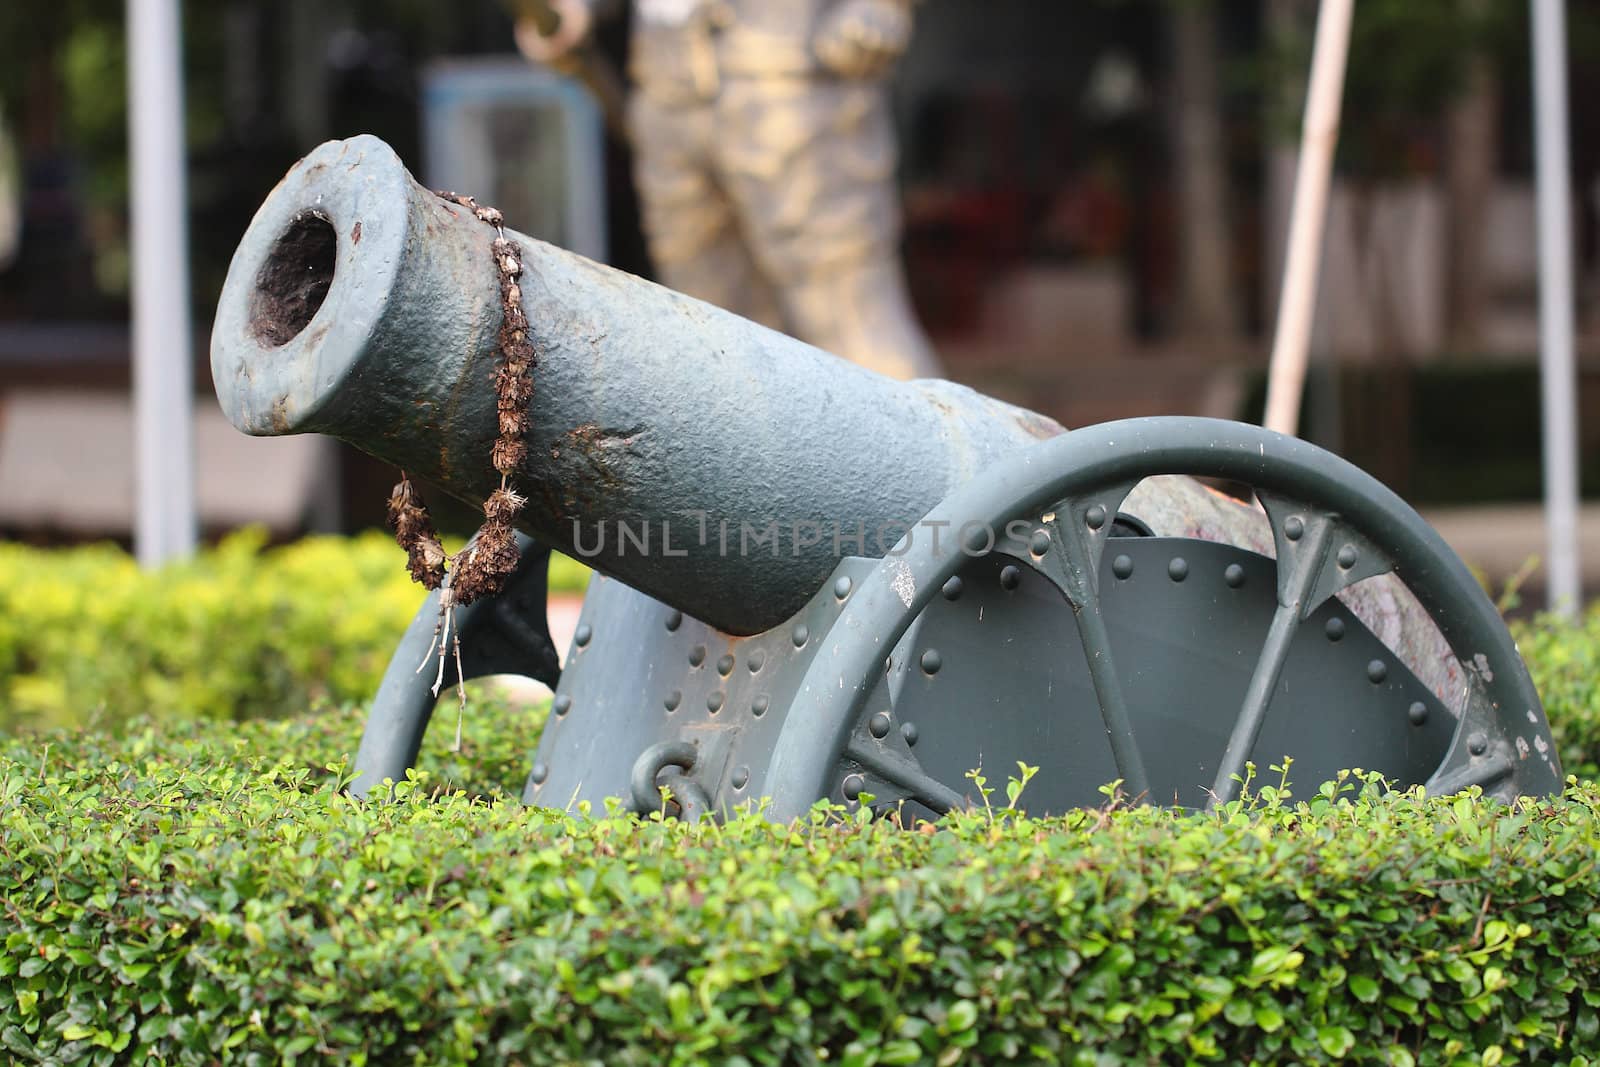 Historic cannon on display by myrainjom01